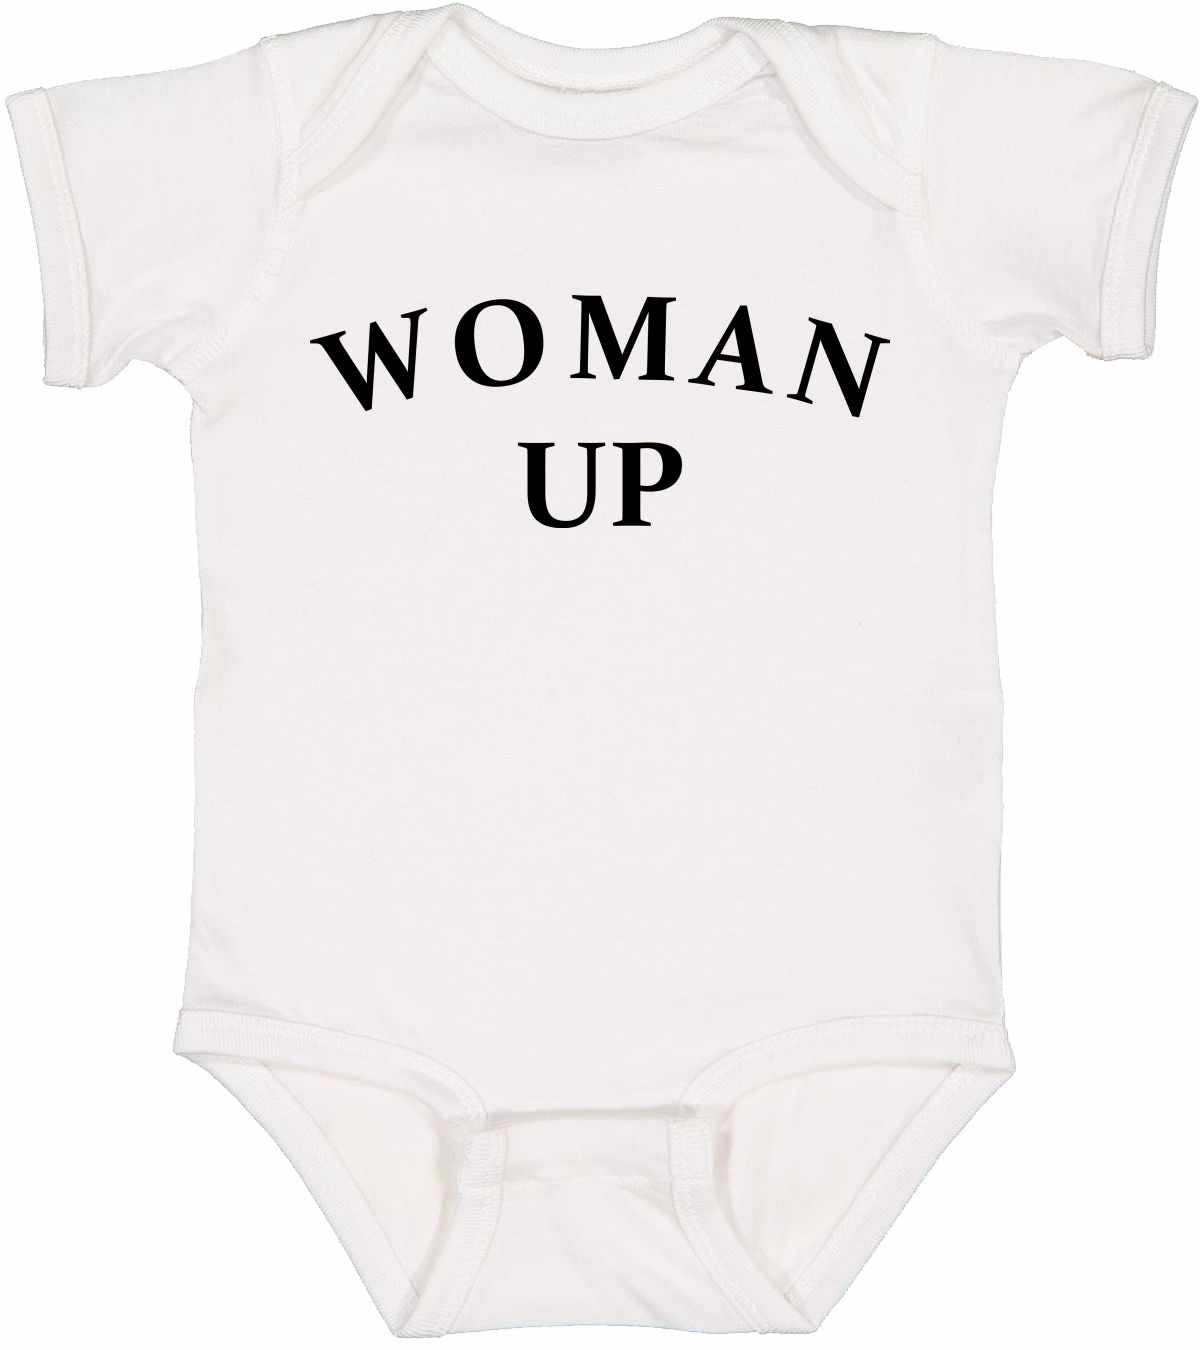 Woman Up on Infant BodySuit (#1010-10)